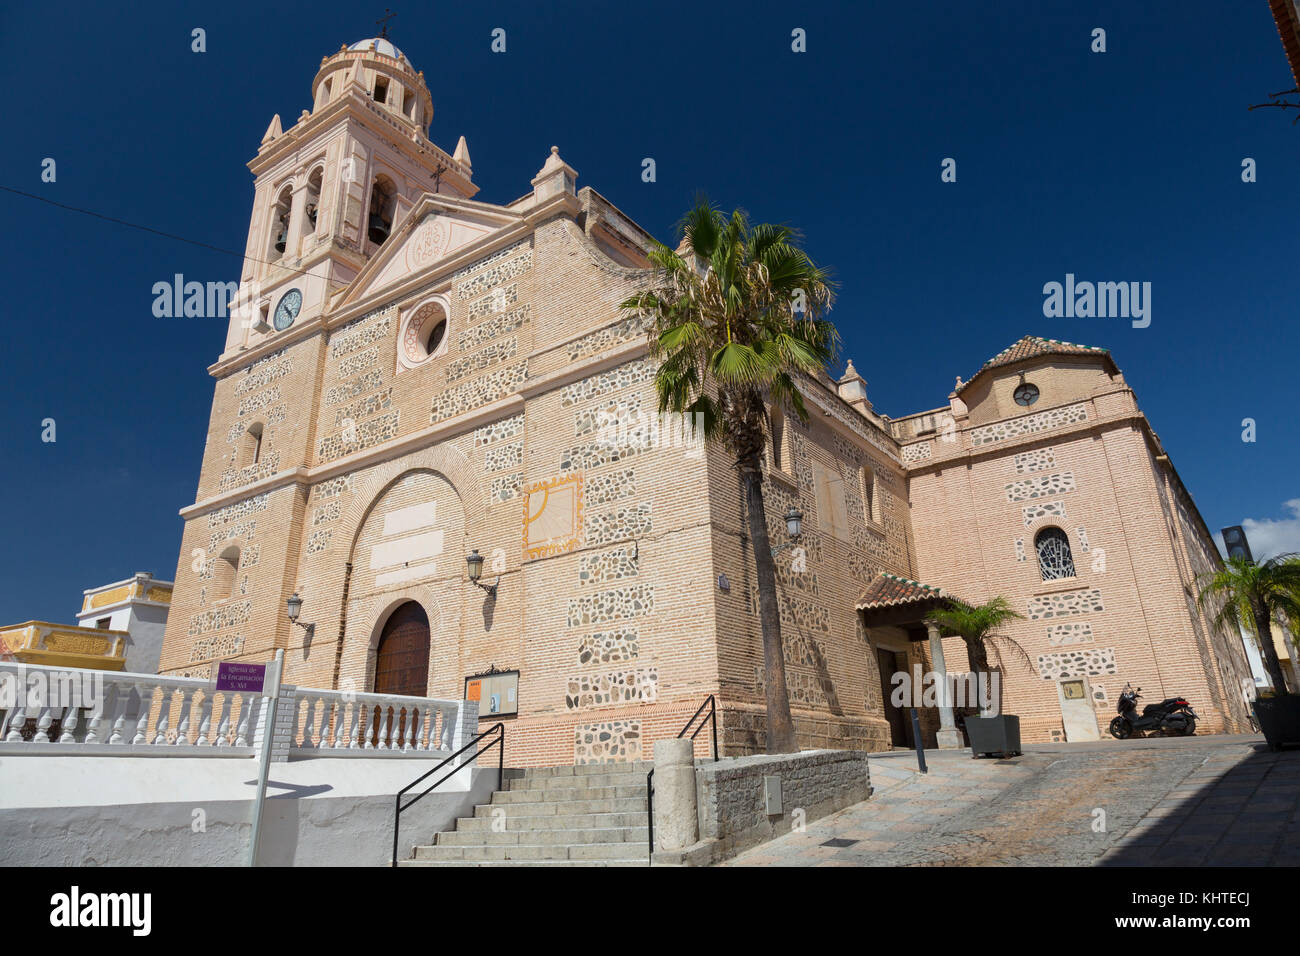 La Iglesia de la Encarnación (Incarnation Church), Almuñécar, Spain Stock Photo